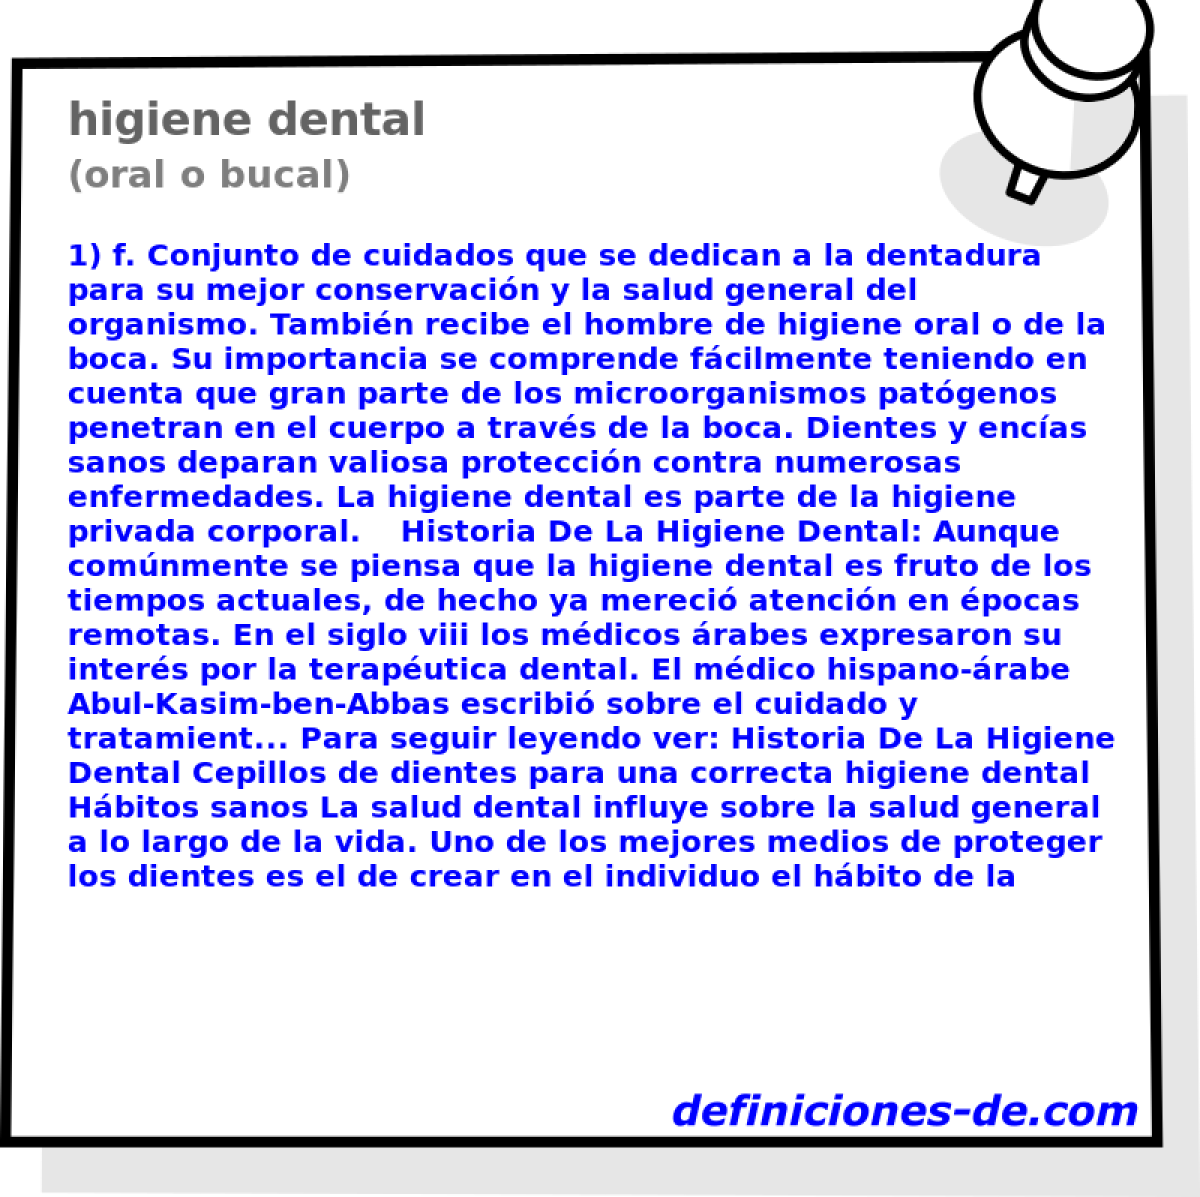 higiene dental (oral o bucal)